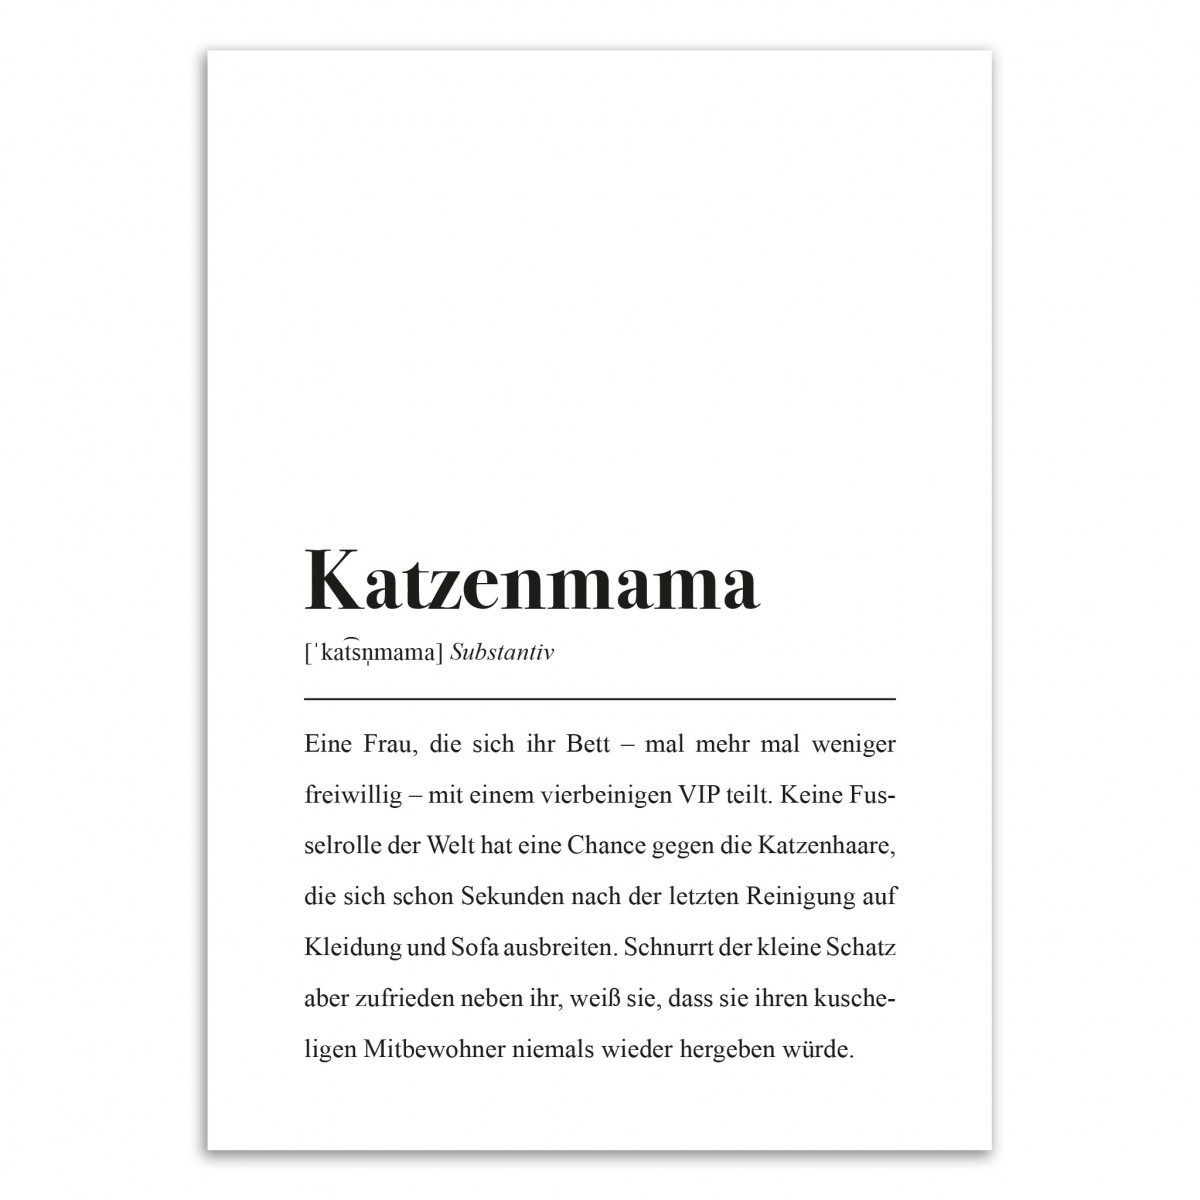 Katzenmama Definition: DIN A4 Poster